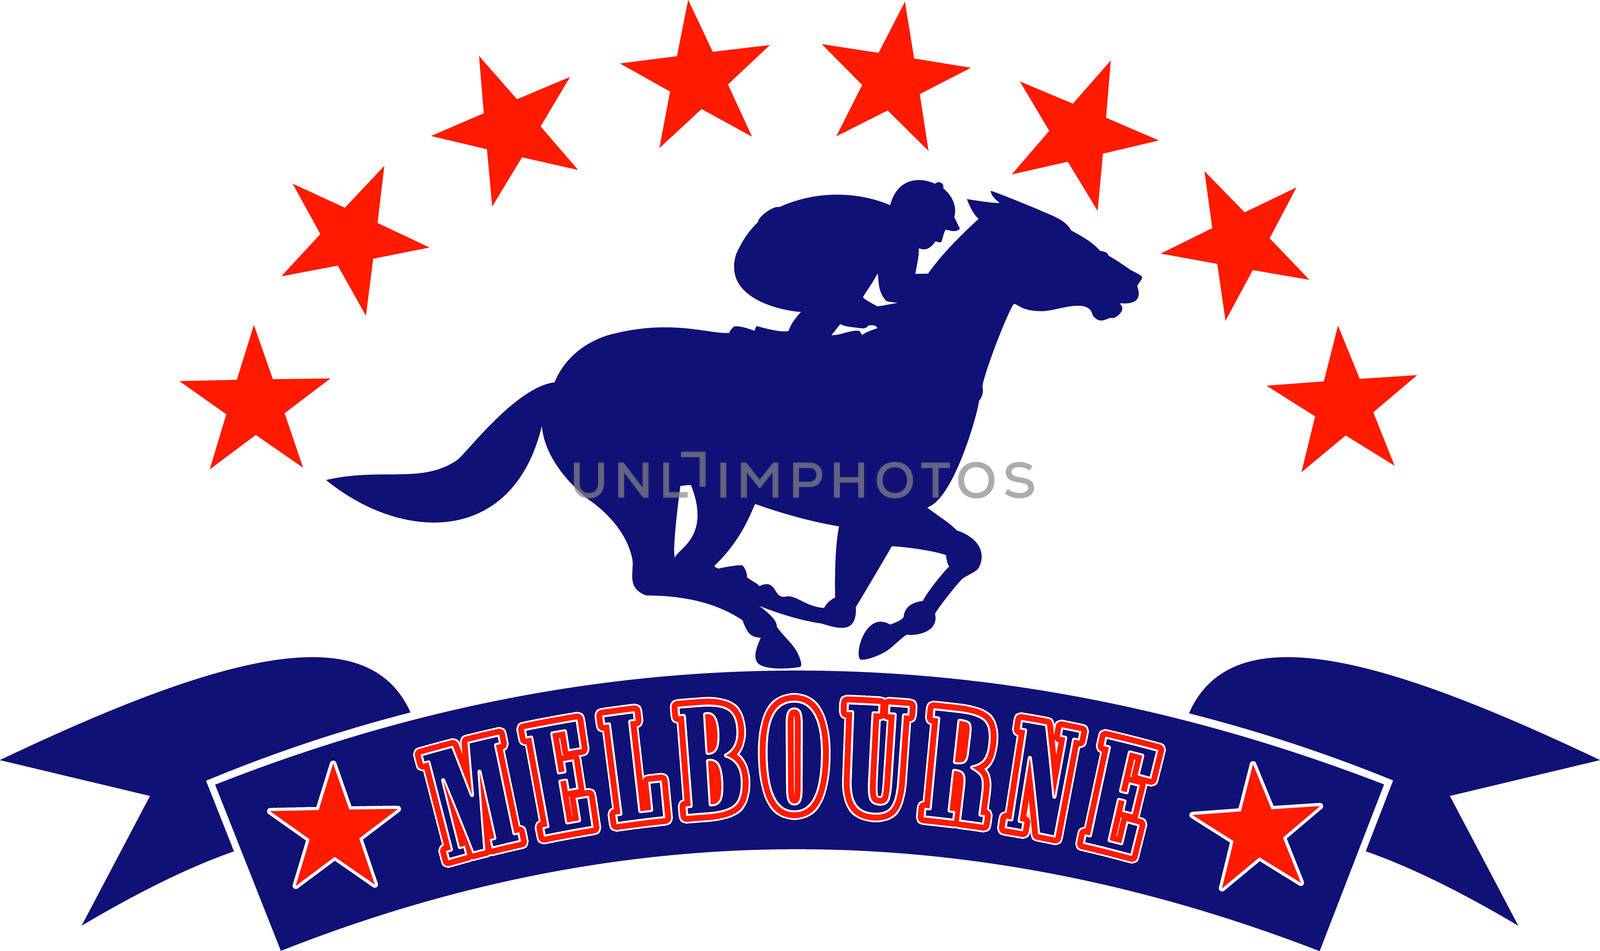 Horse and jockey racing stars melbourne by patrimonio